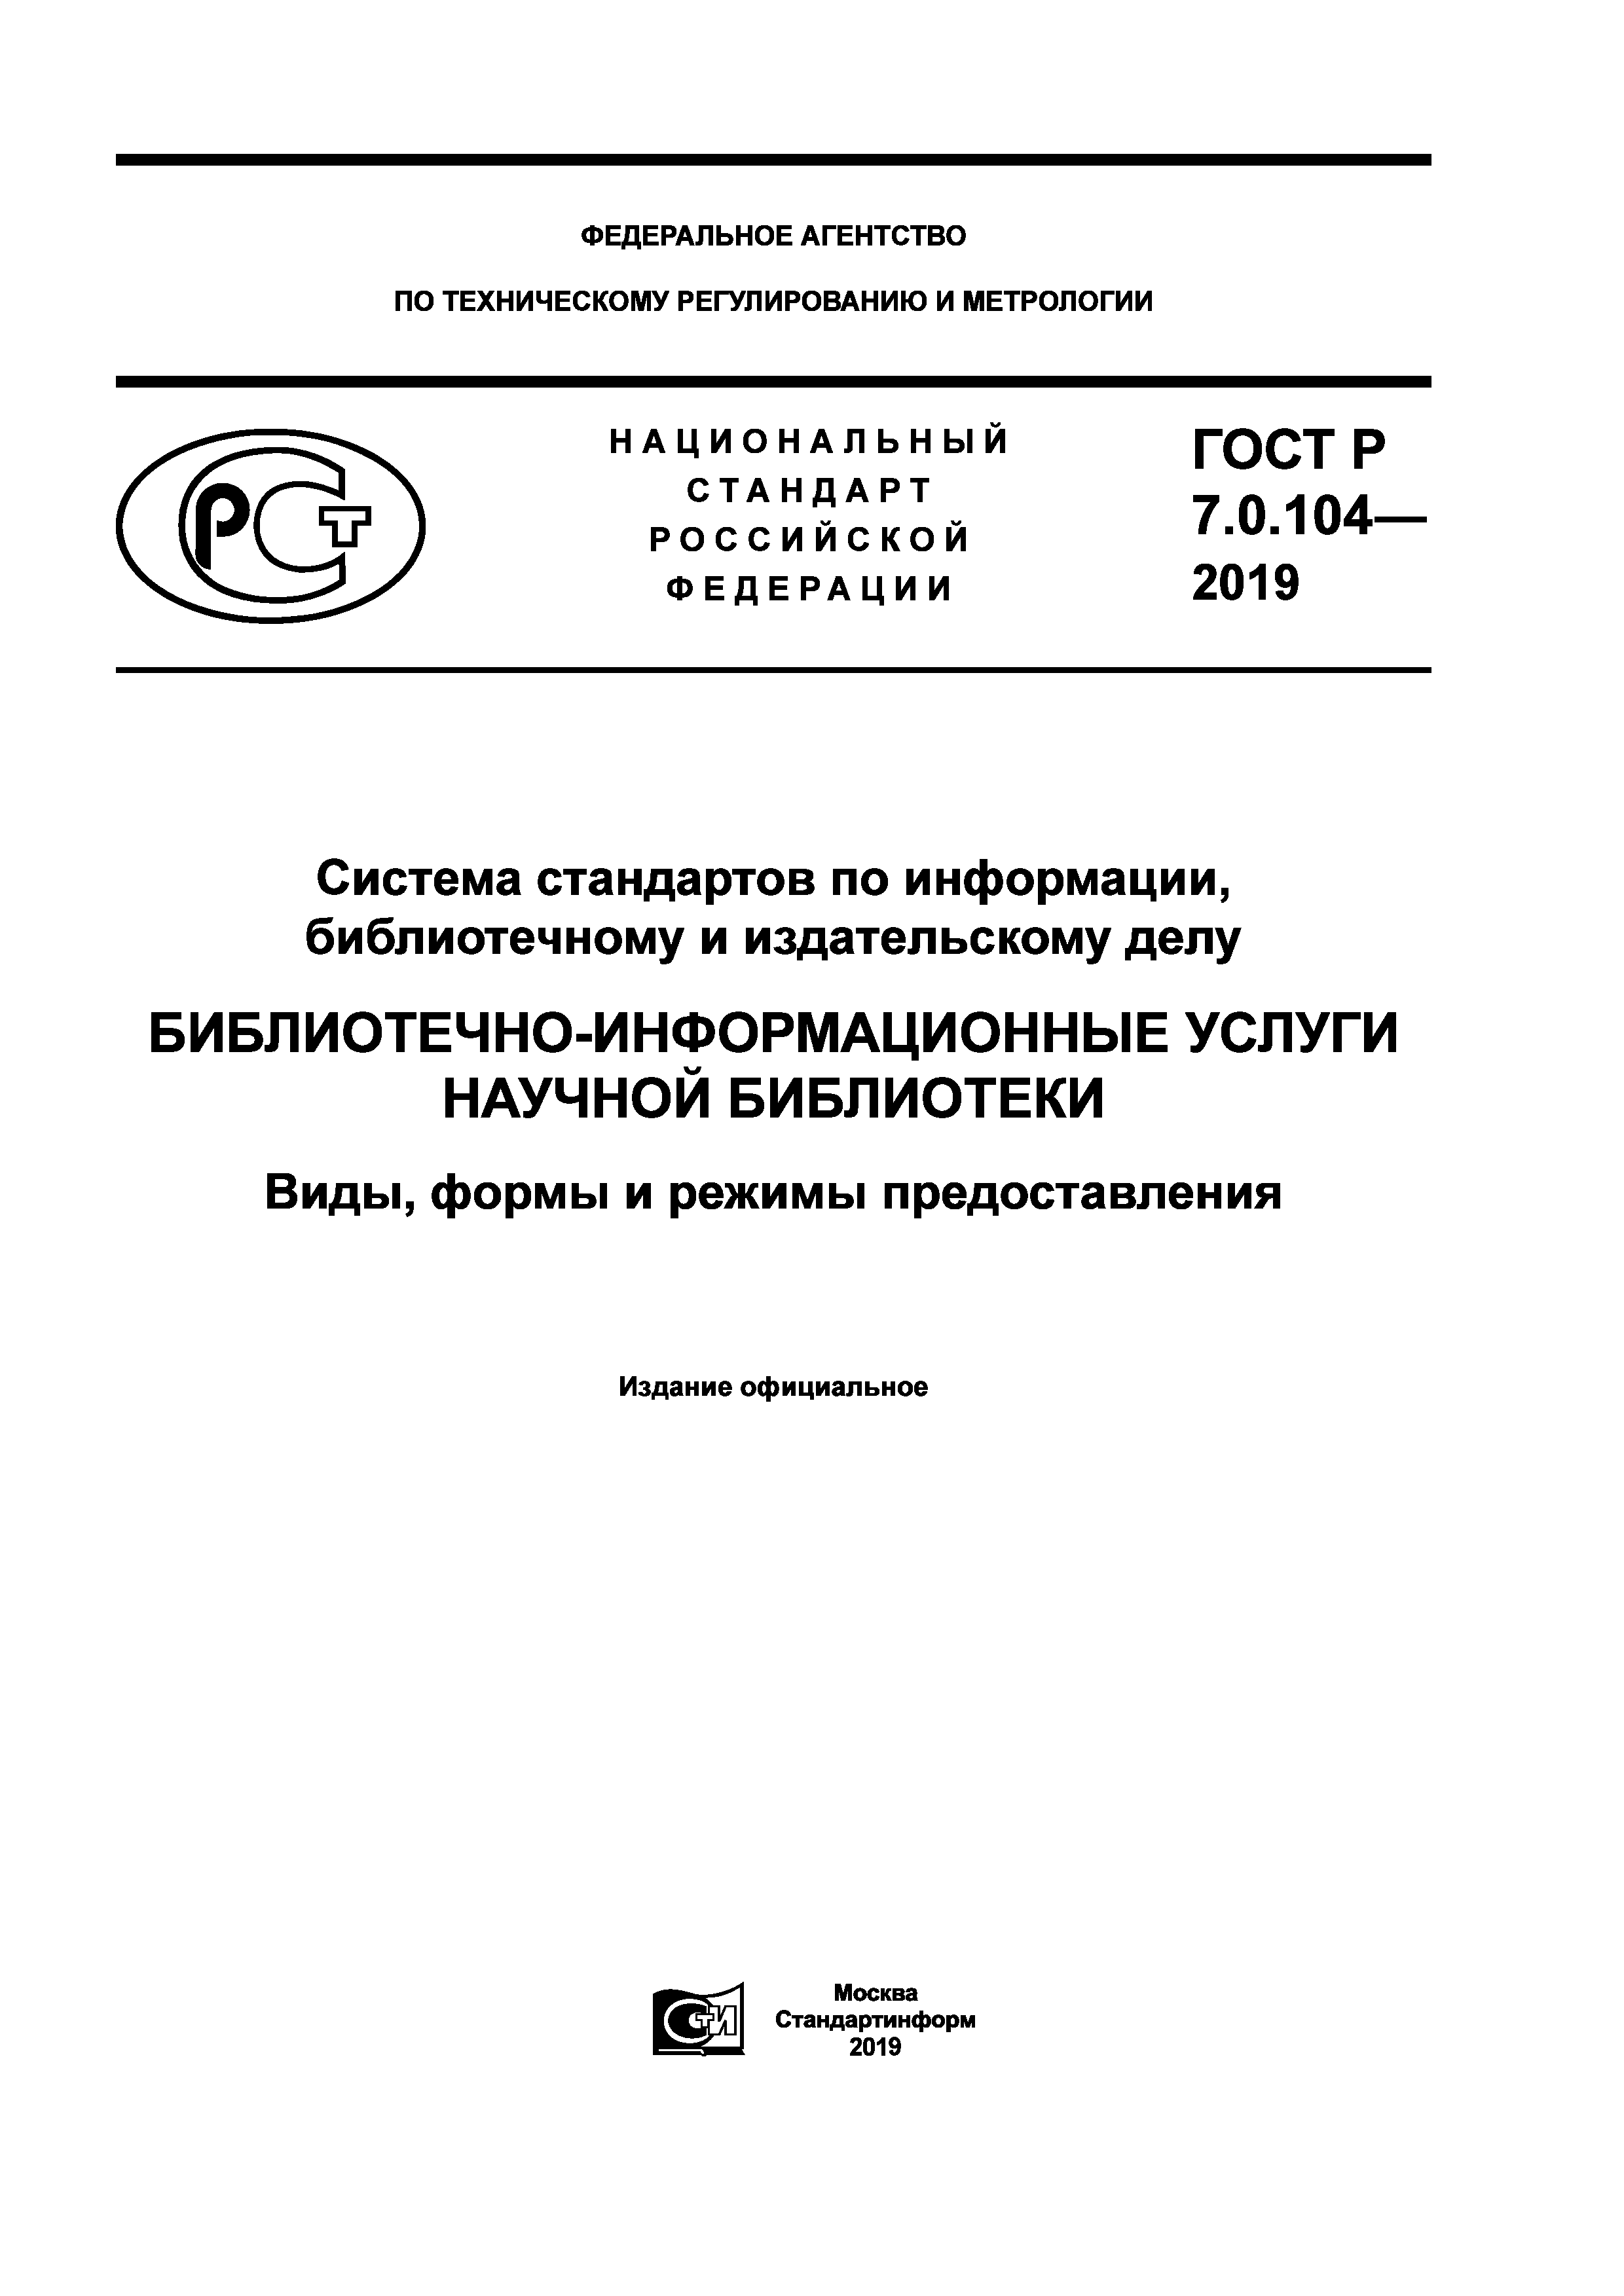 ГОСТ Р 7.0.104-2019